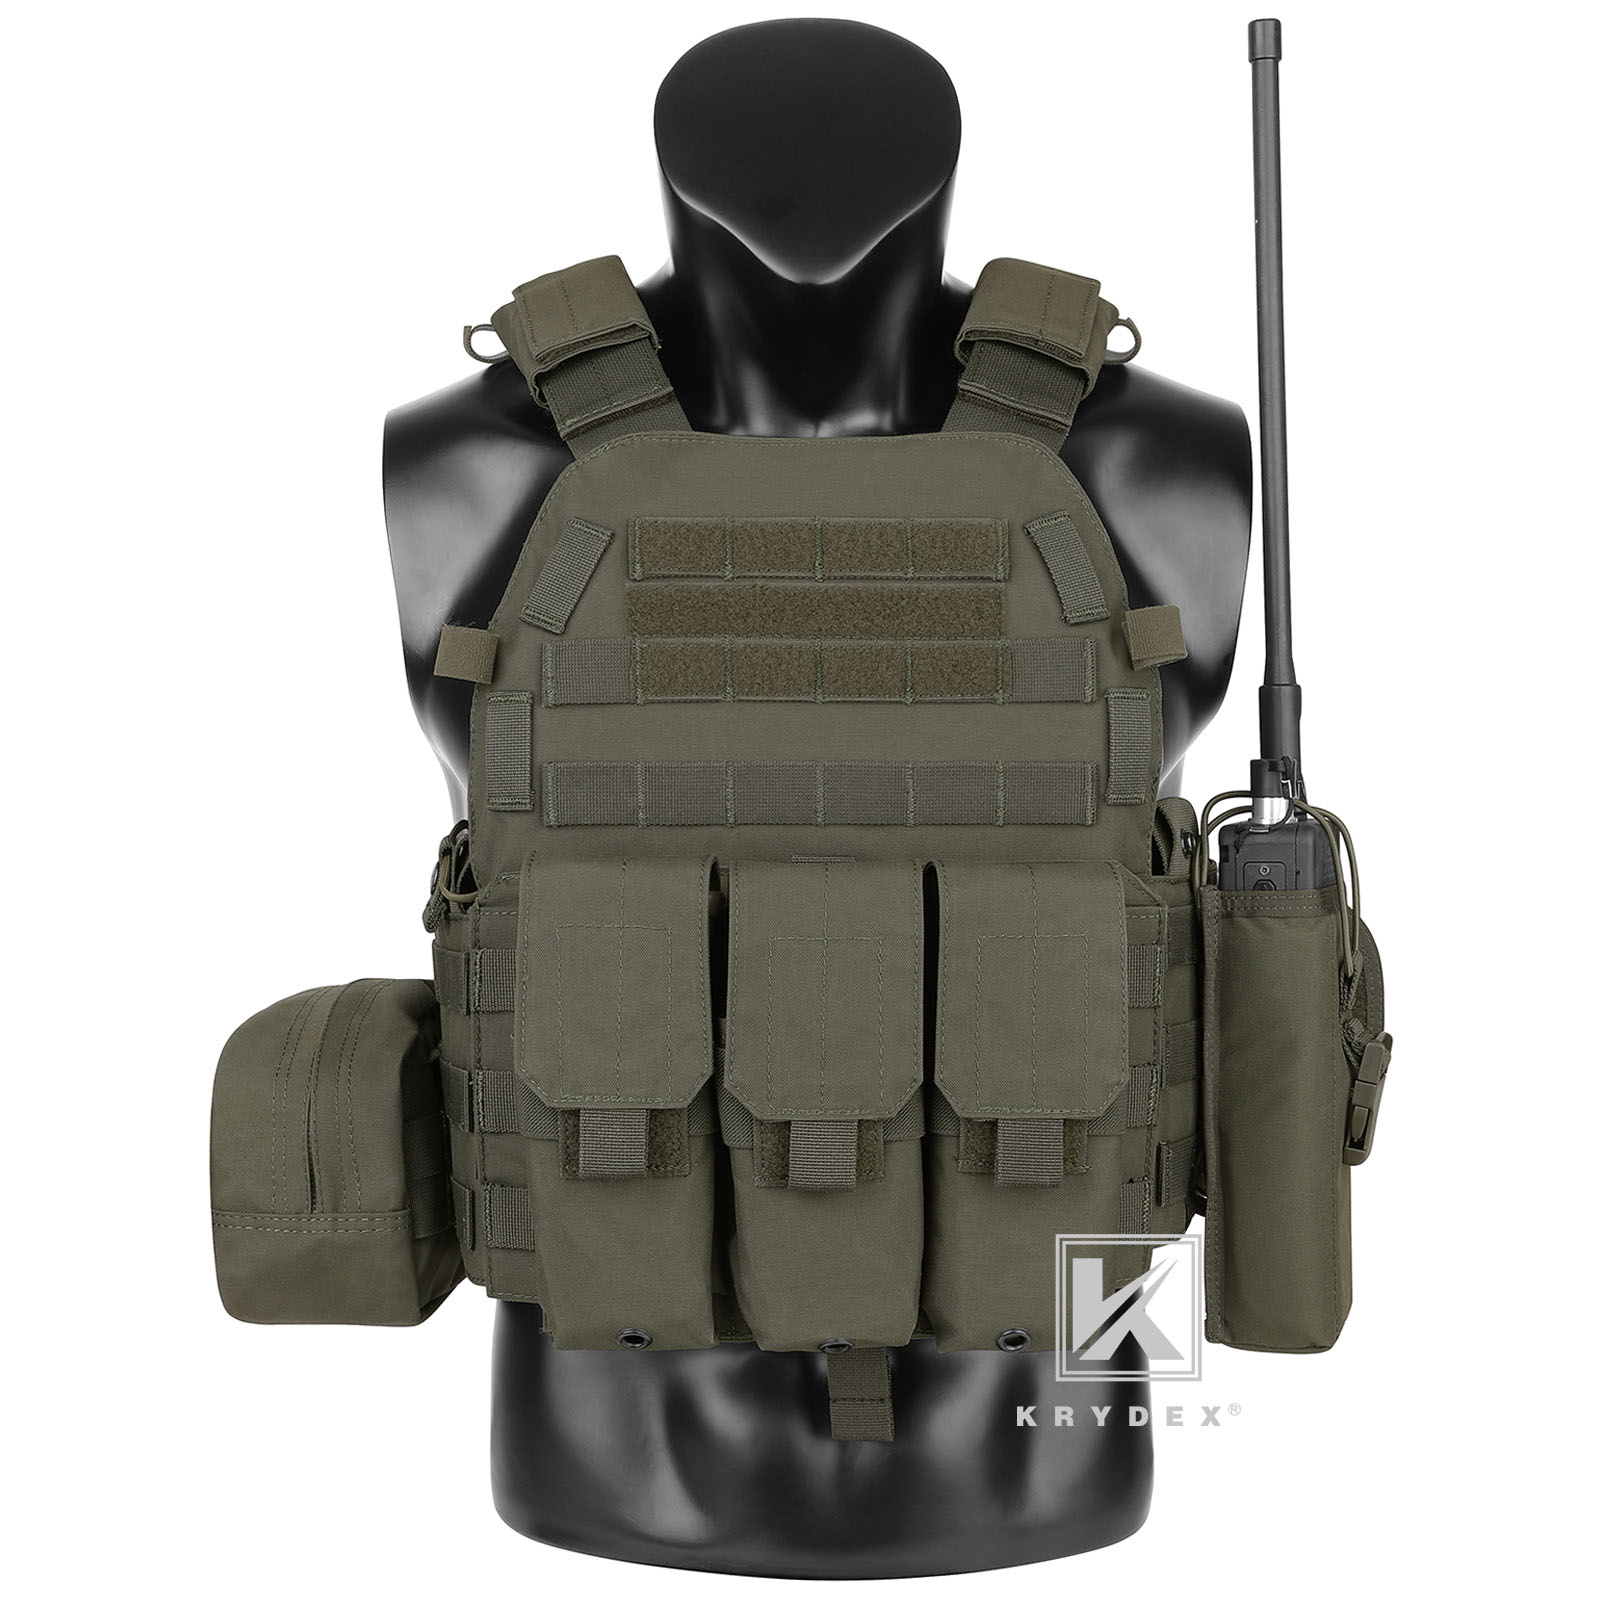 KRYDEX LBT-6094A Plate Carrier Tactical Body Armor Vest w/ Pouch Ranger Gre...